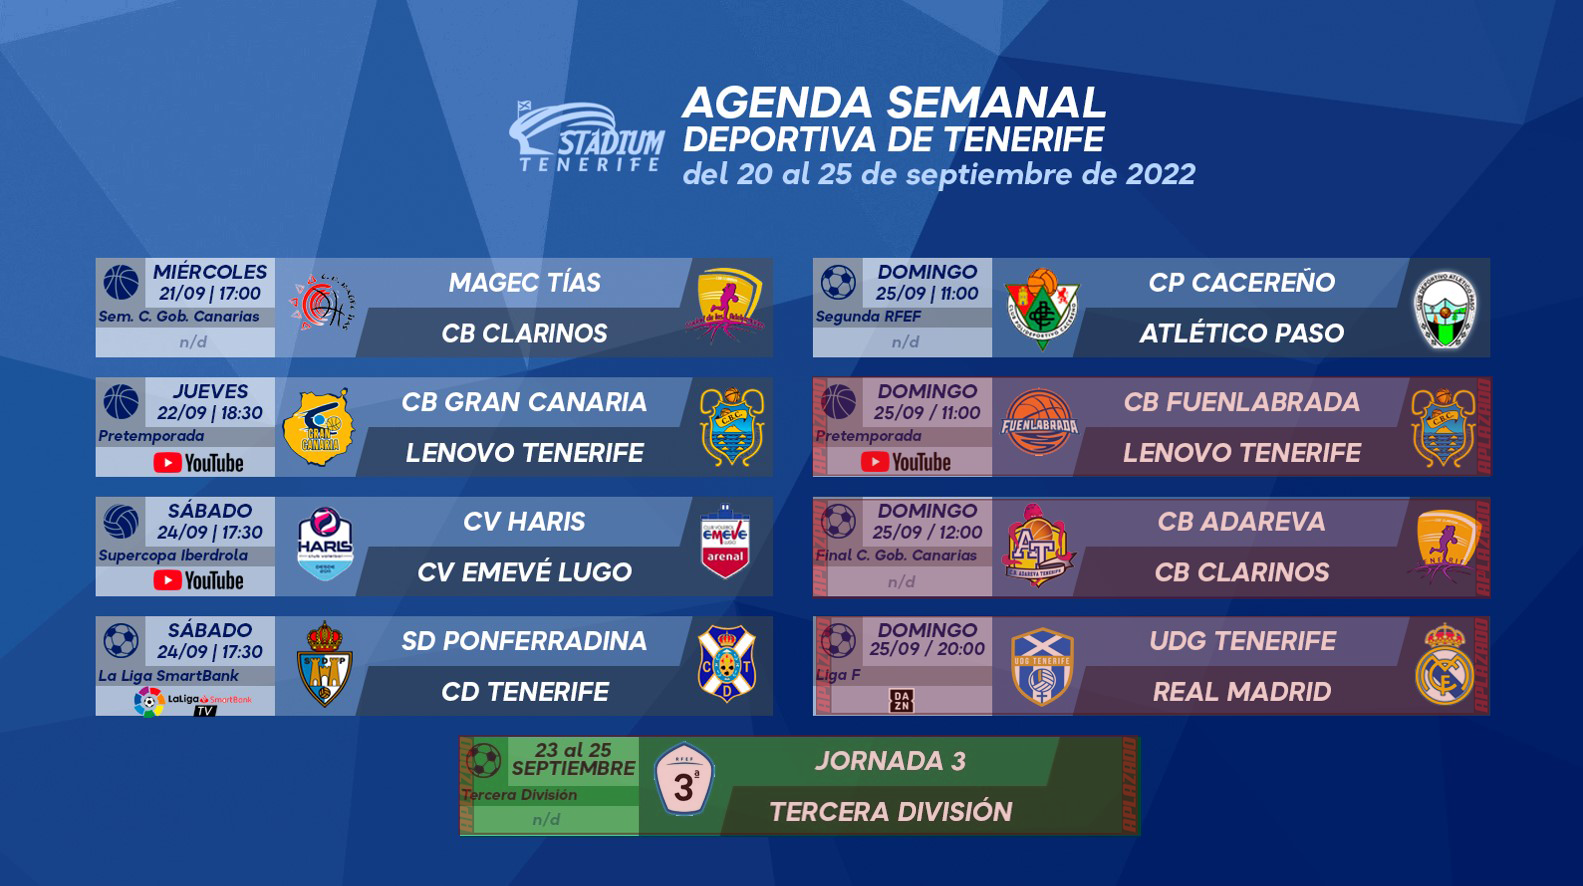 Agenda Semanal Deportiva de Tenerife (20 al 25 de septiembre de 2022)